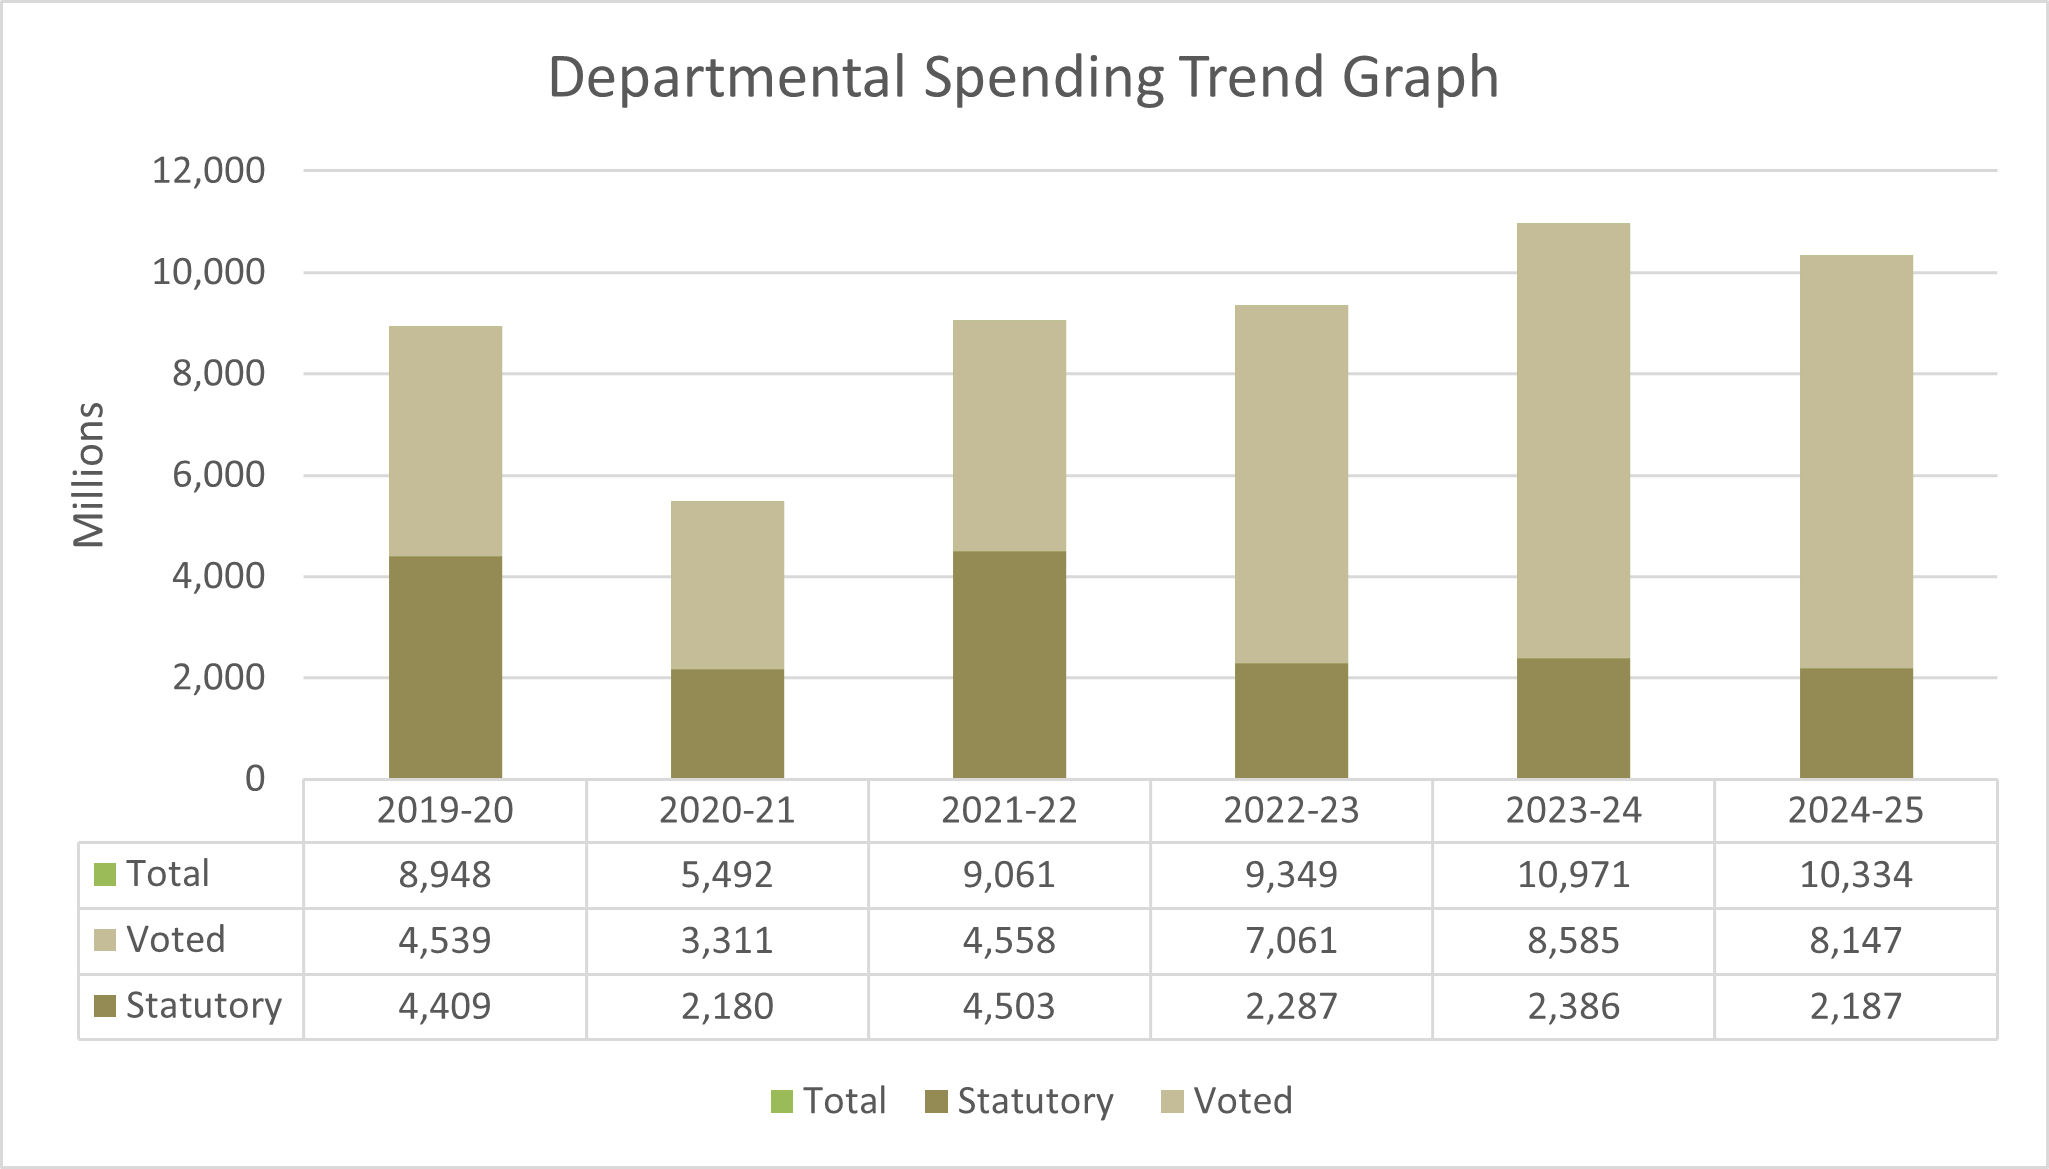 Departmental Spending Trend graph